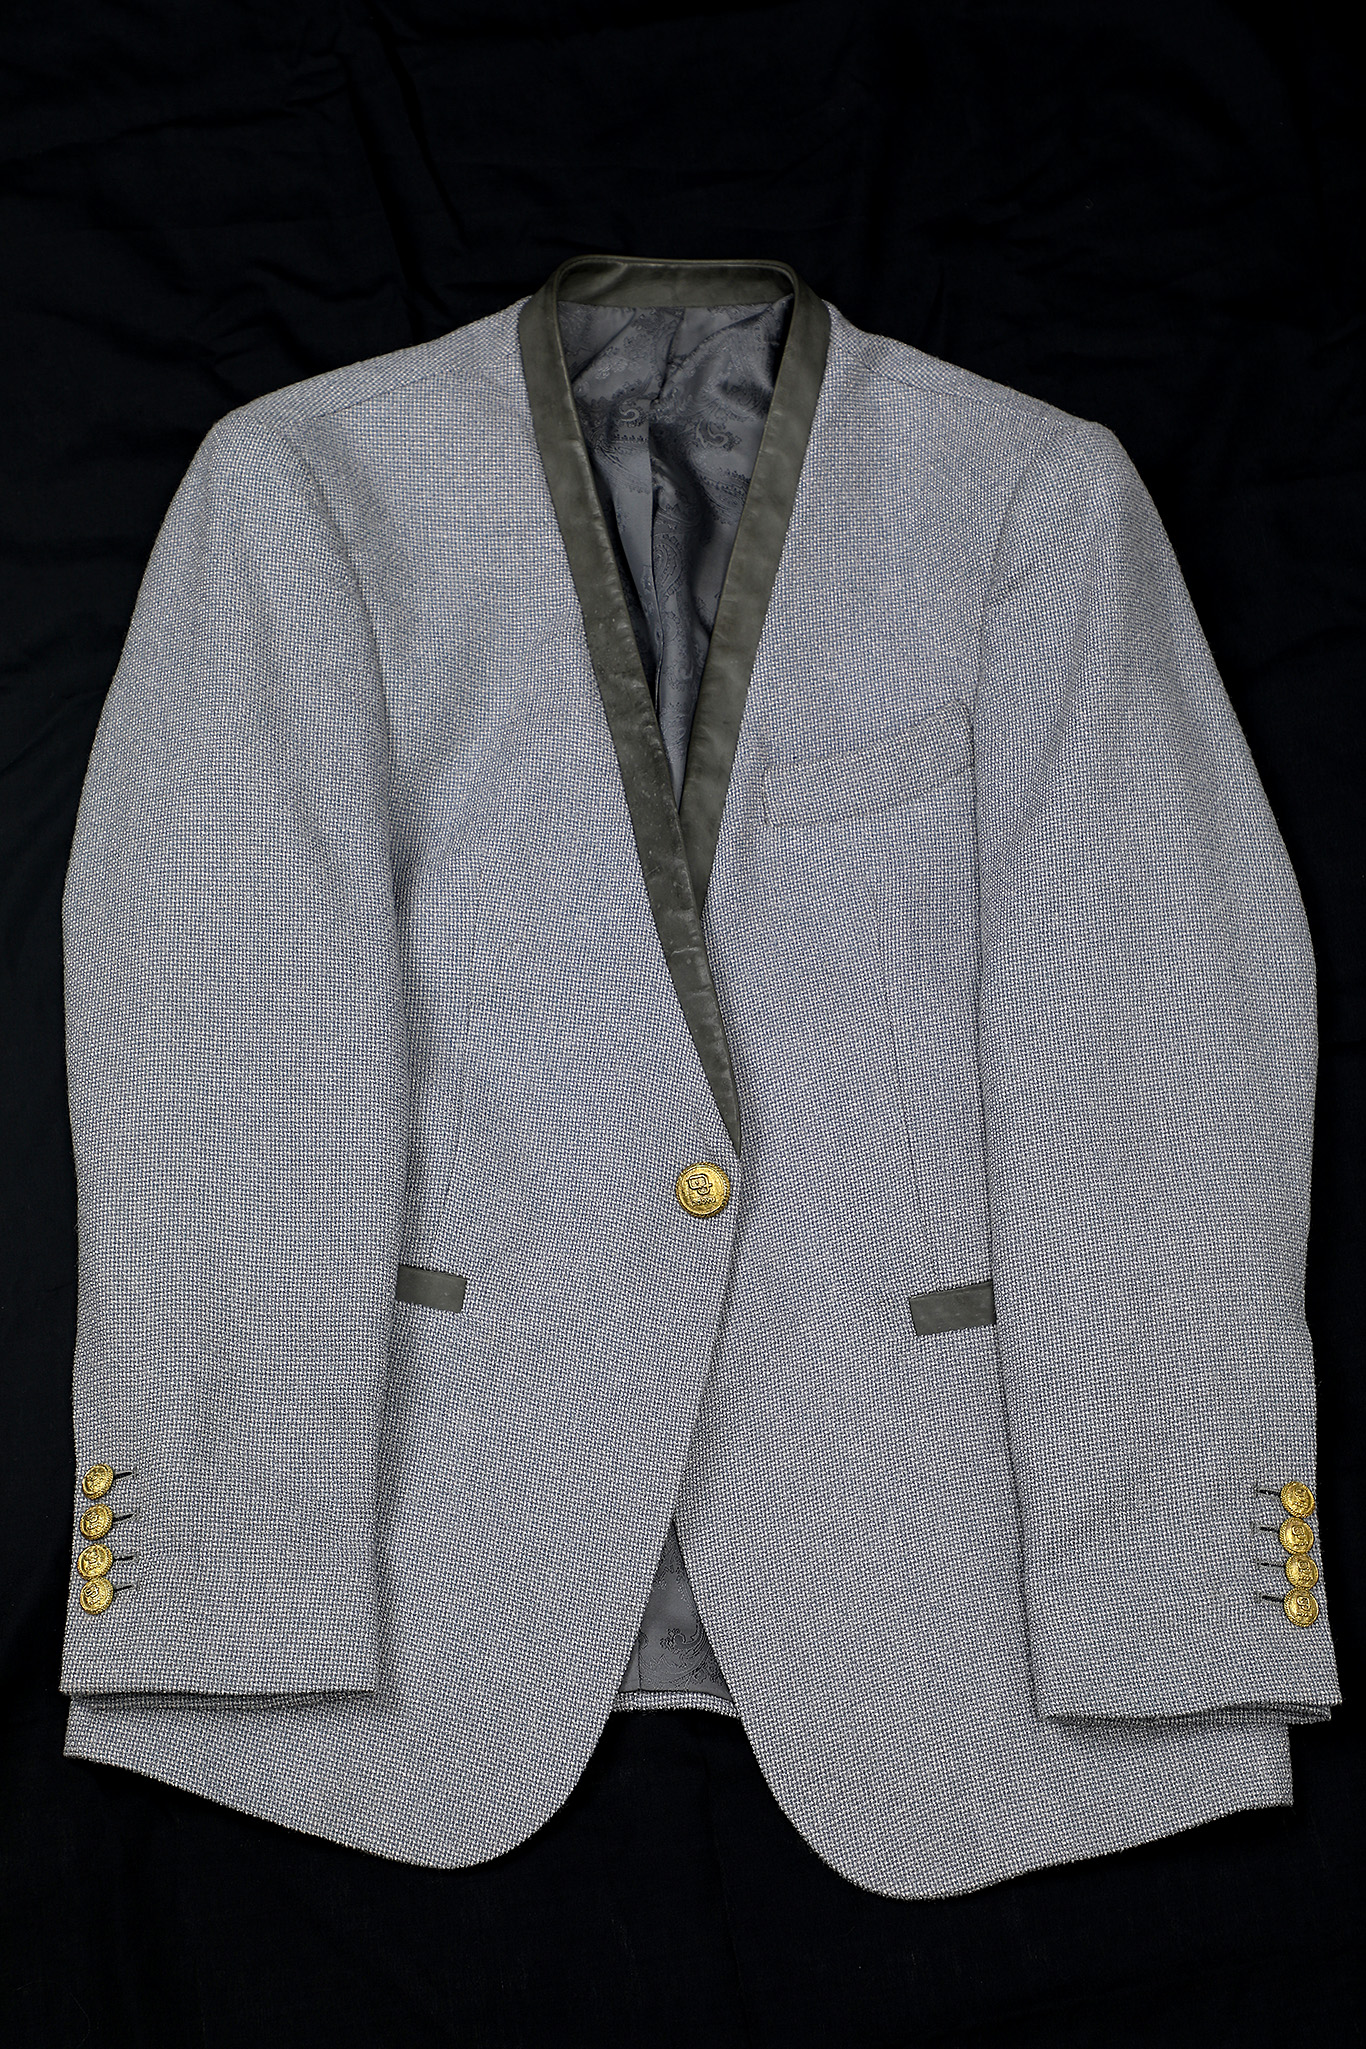 grey business casual men's jacket nairobi kenya